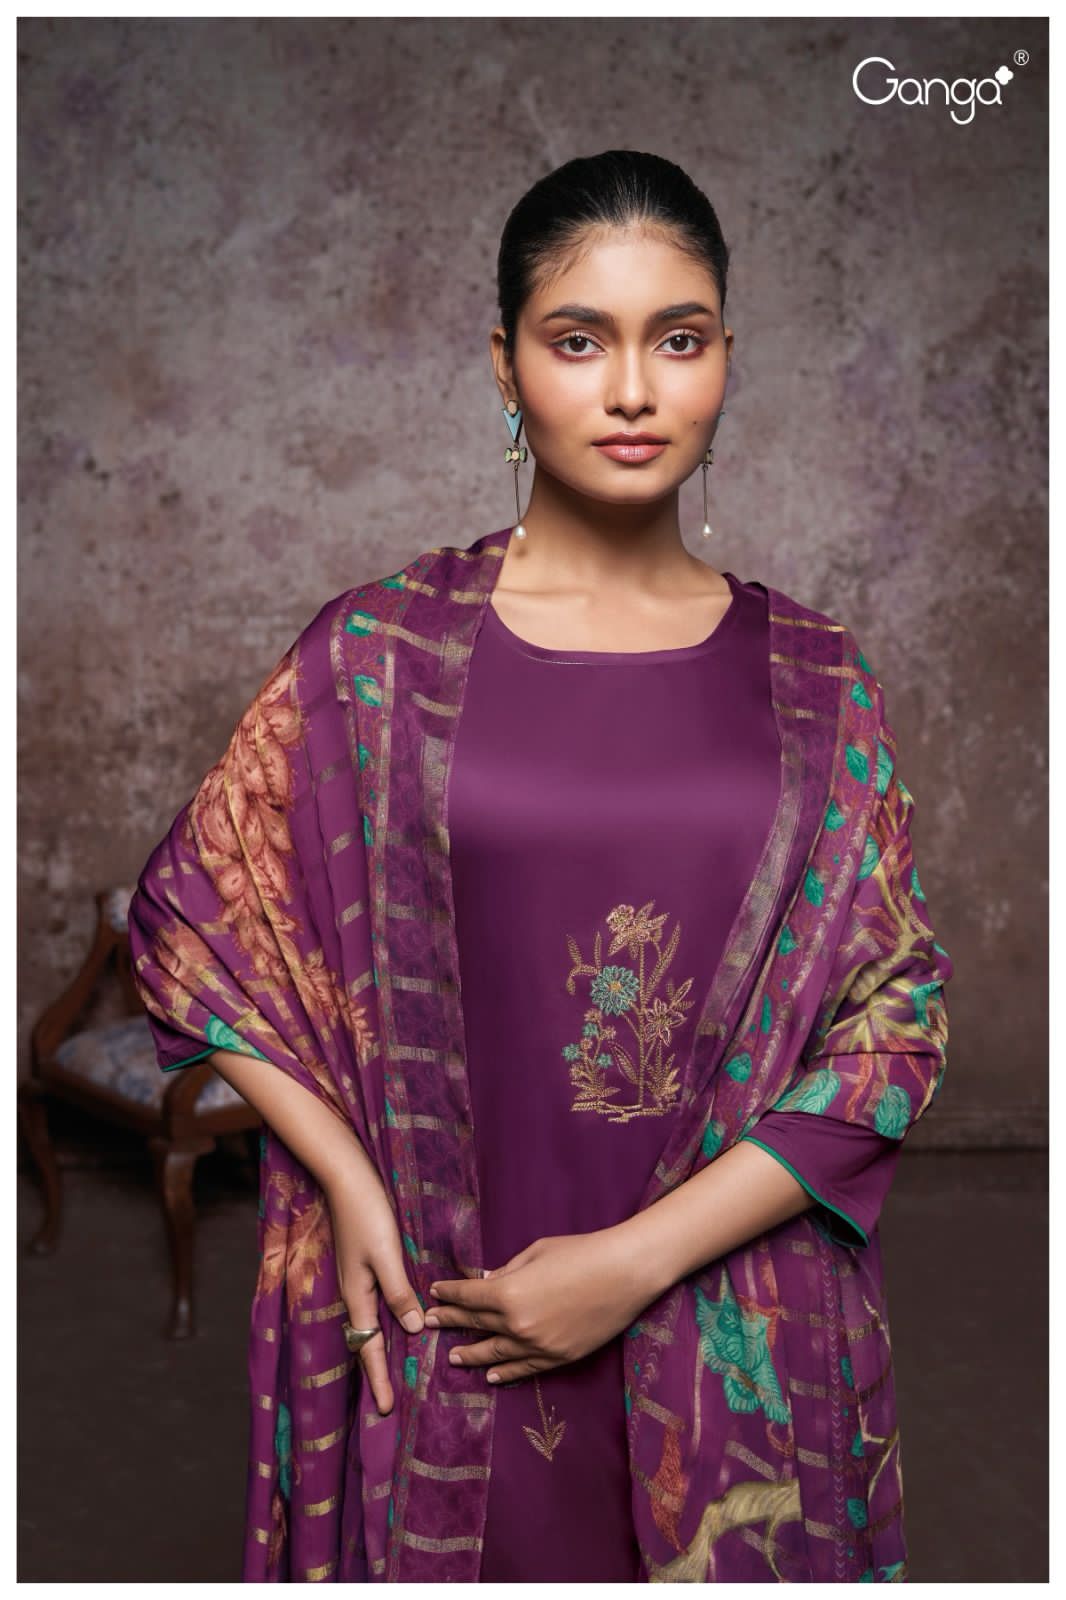 Saige 2329 Ganga Cotton Silk Plazzo Style Suits